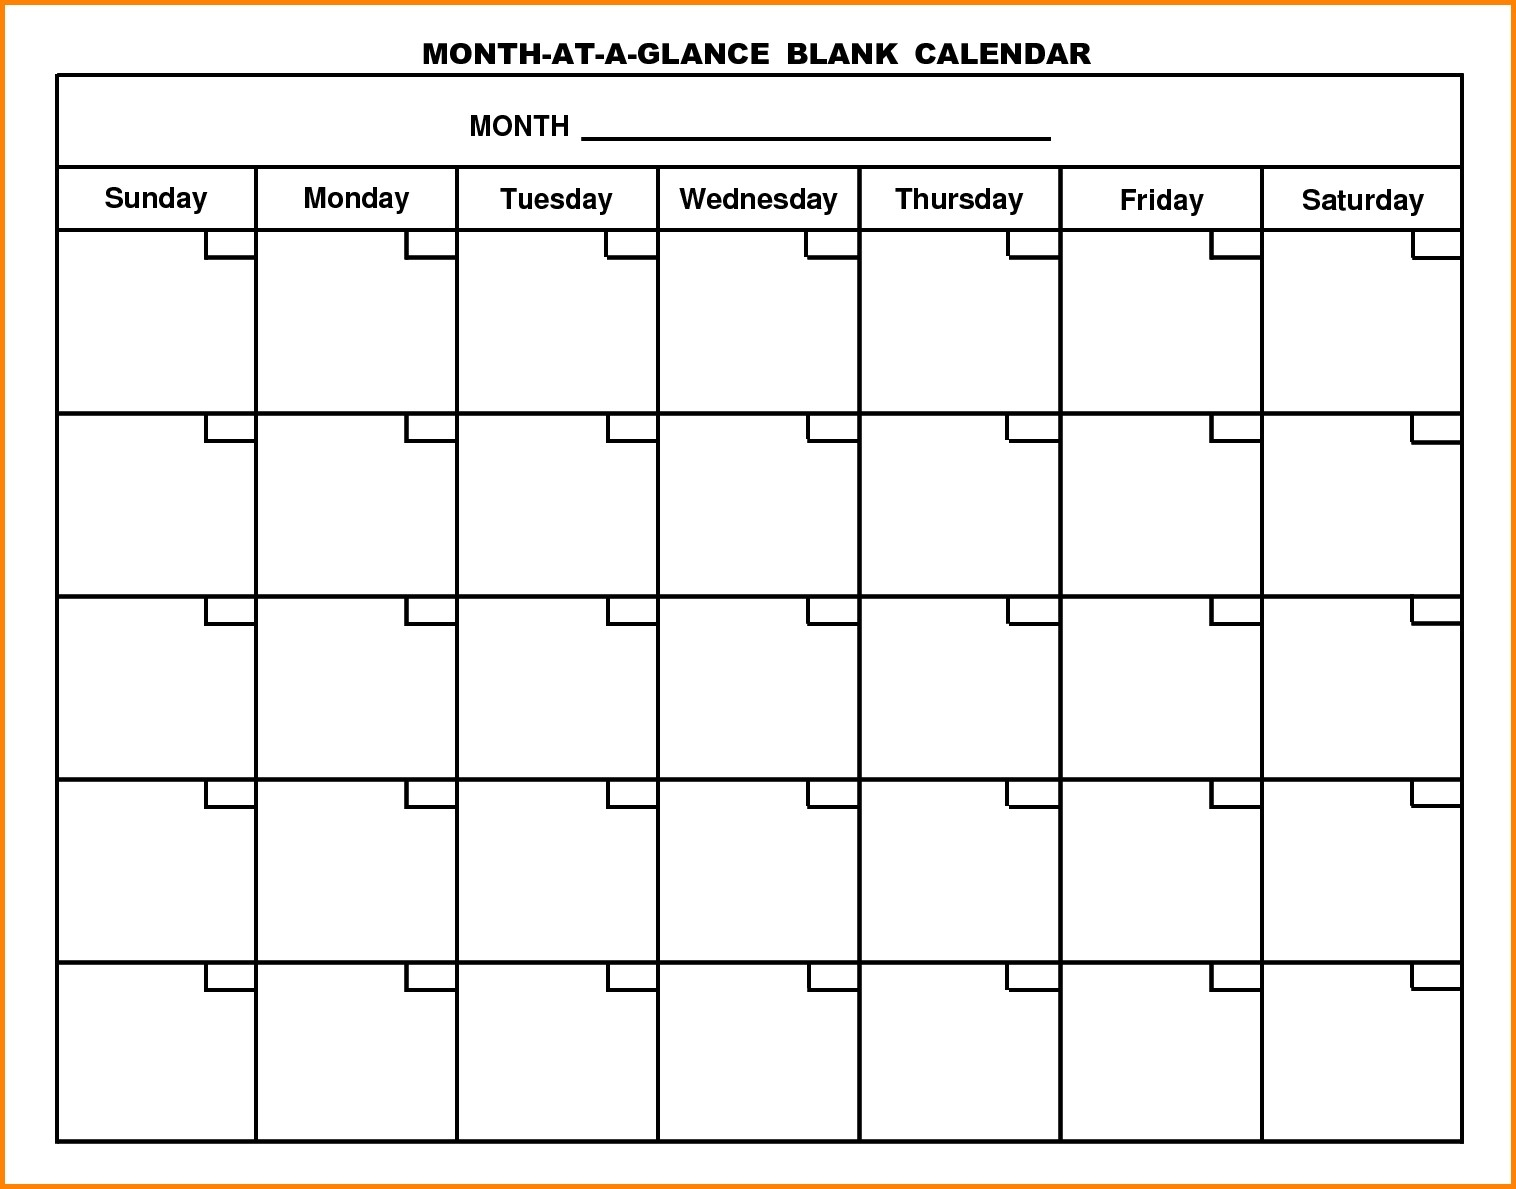 Month At A Glance Blank Calendar Printable | Monthly Regarding Month At A Glance Blank Calendar Template